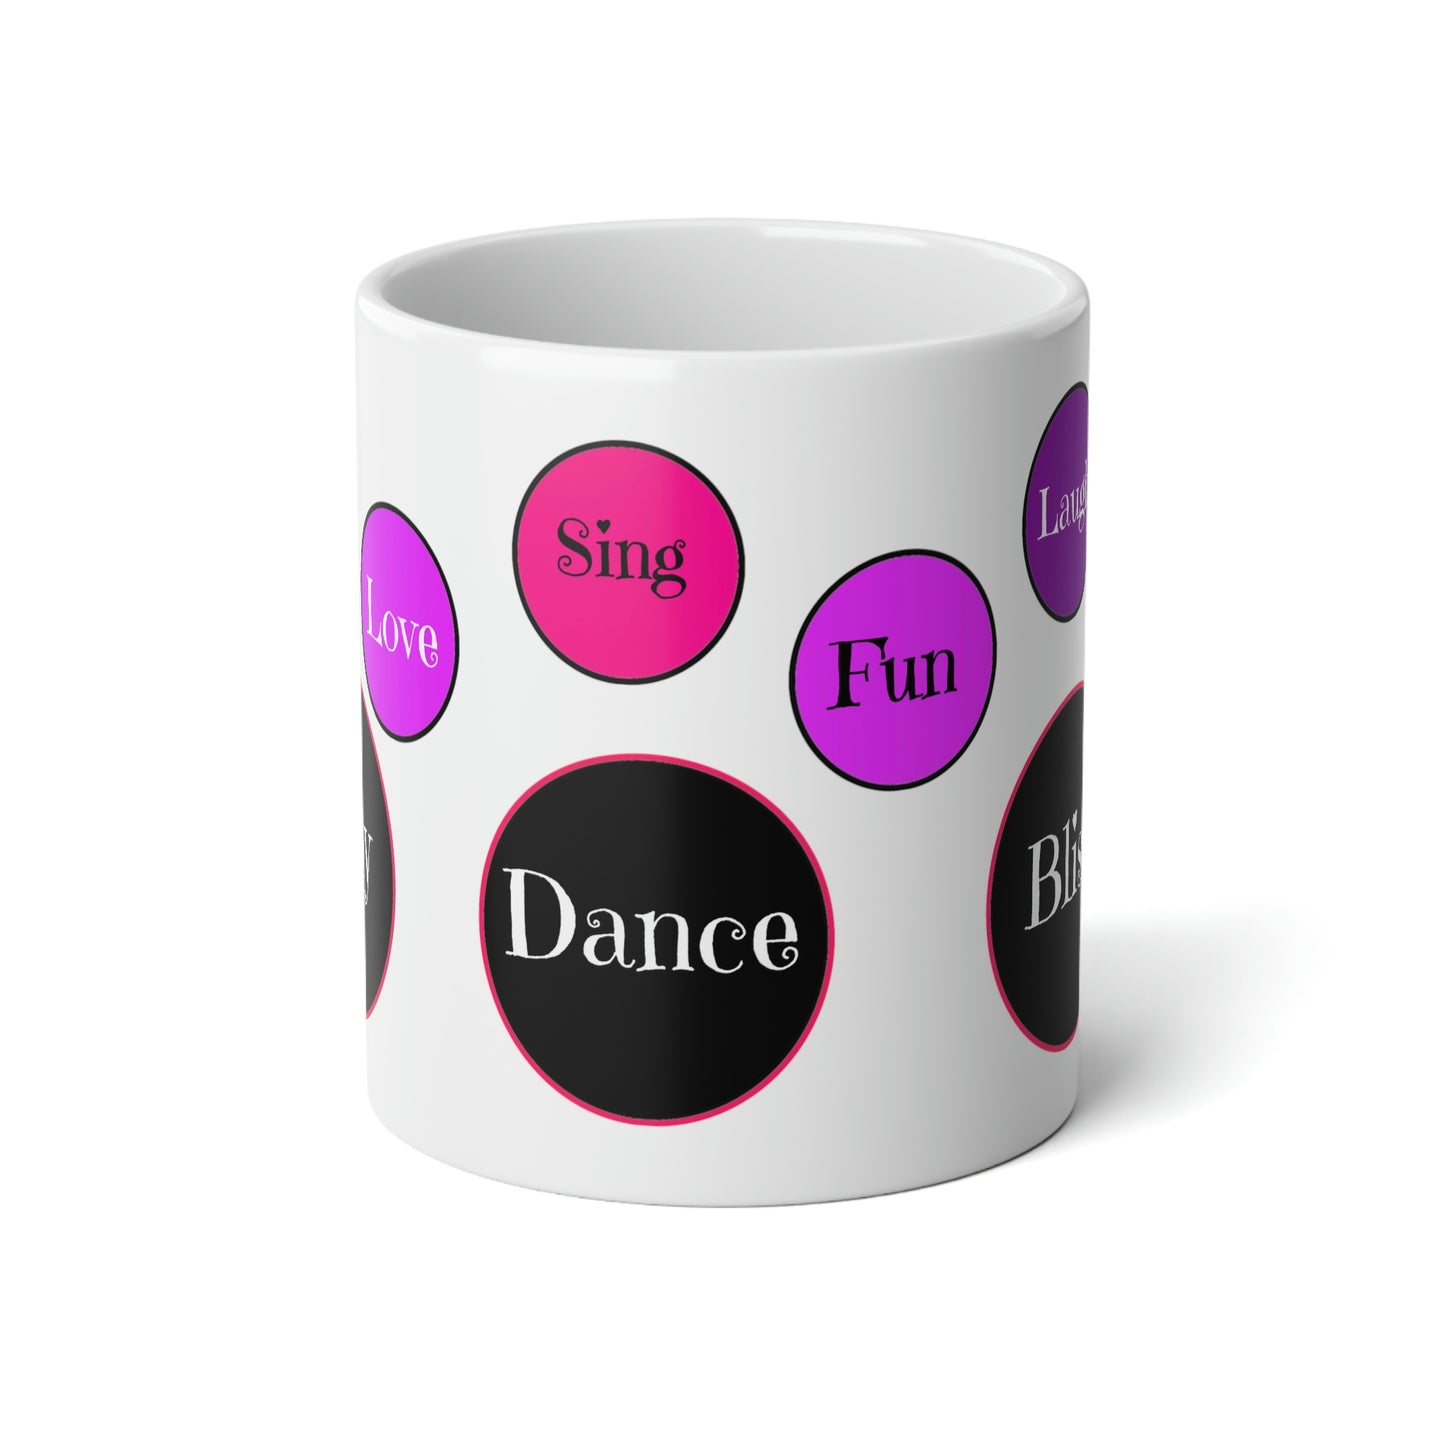 Jumbo Mug 20oz - Joy Laugh Play Dance Sing Bliss Fun